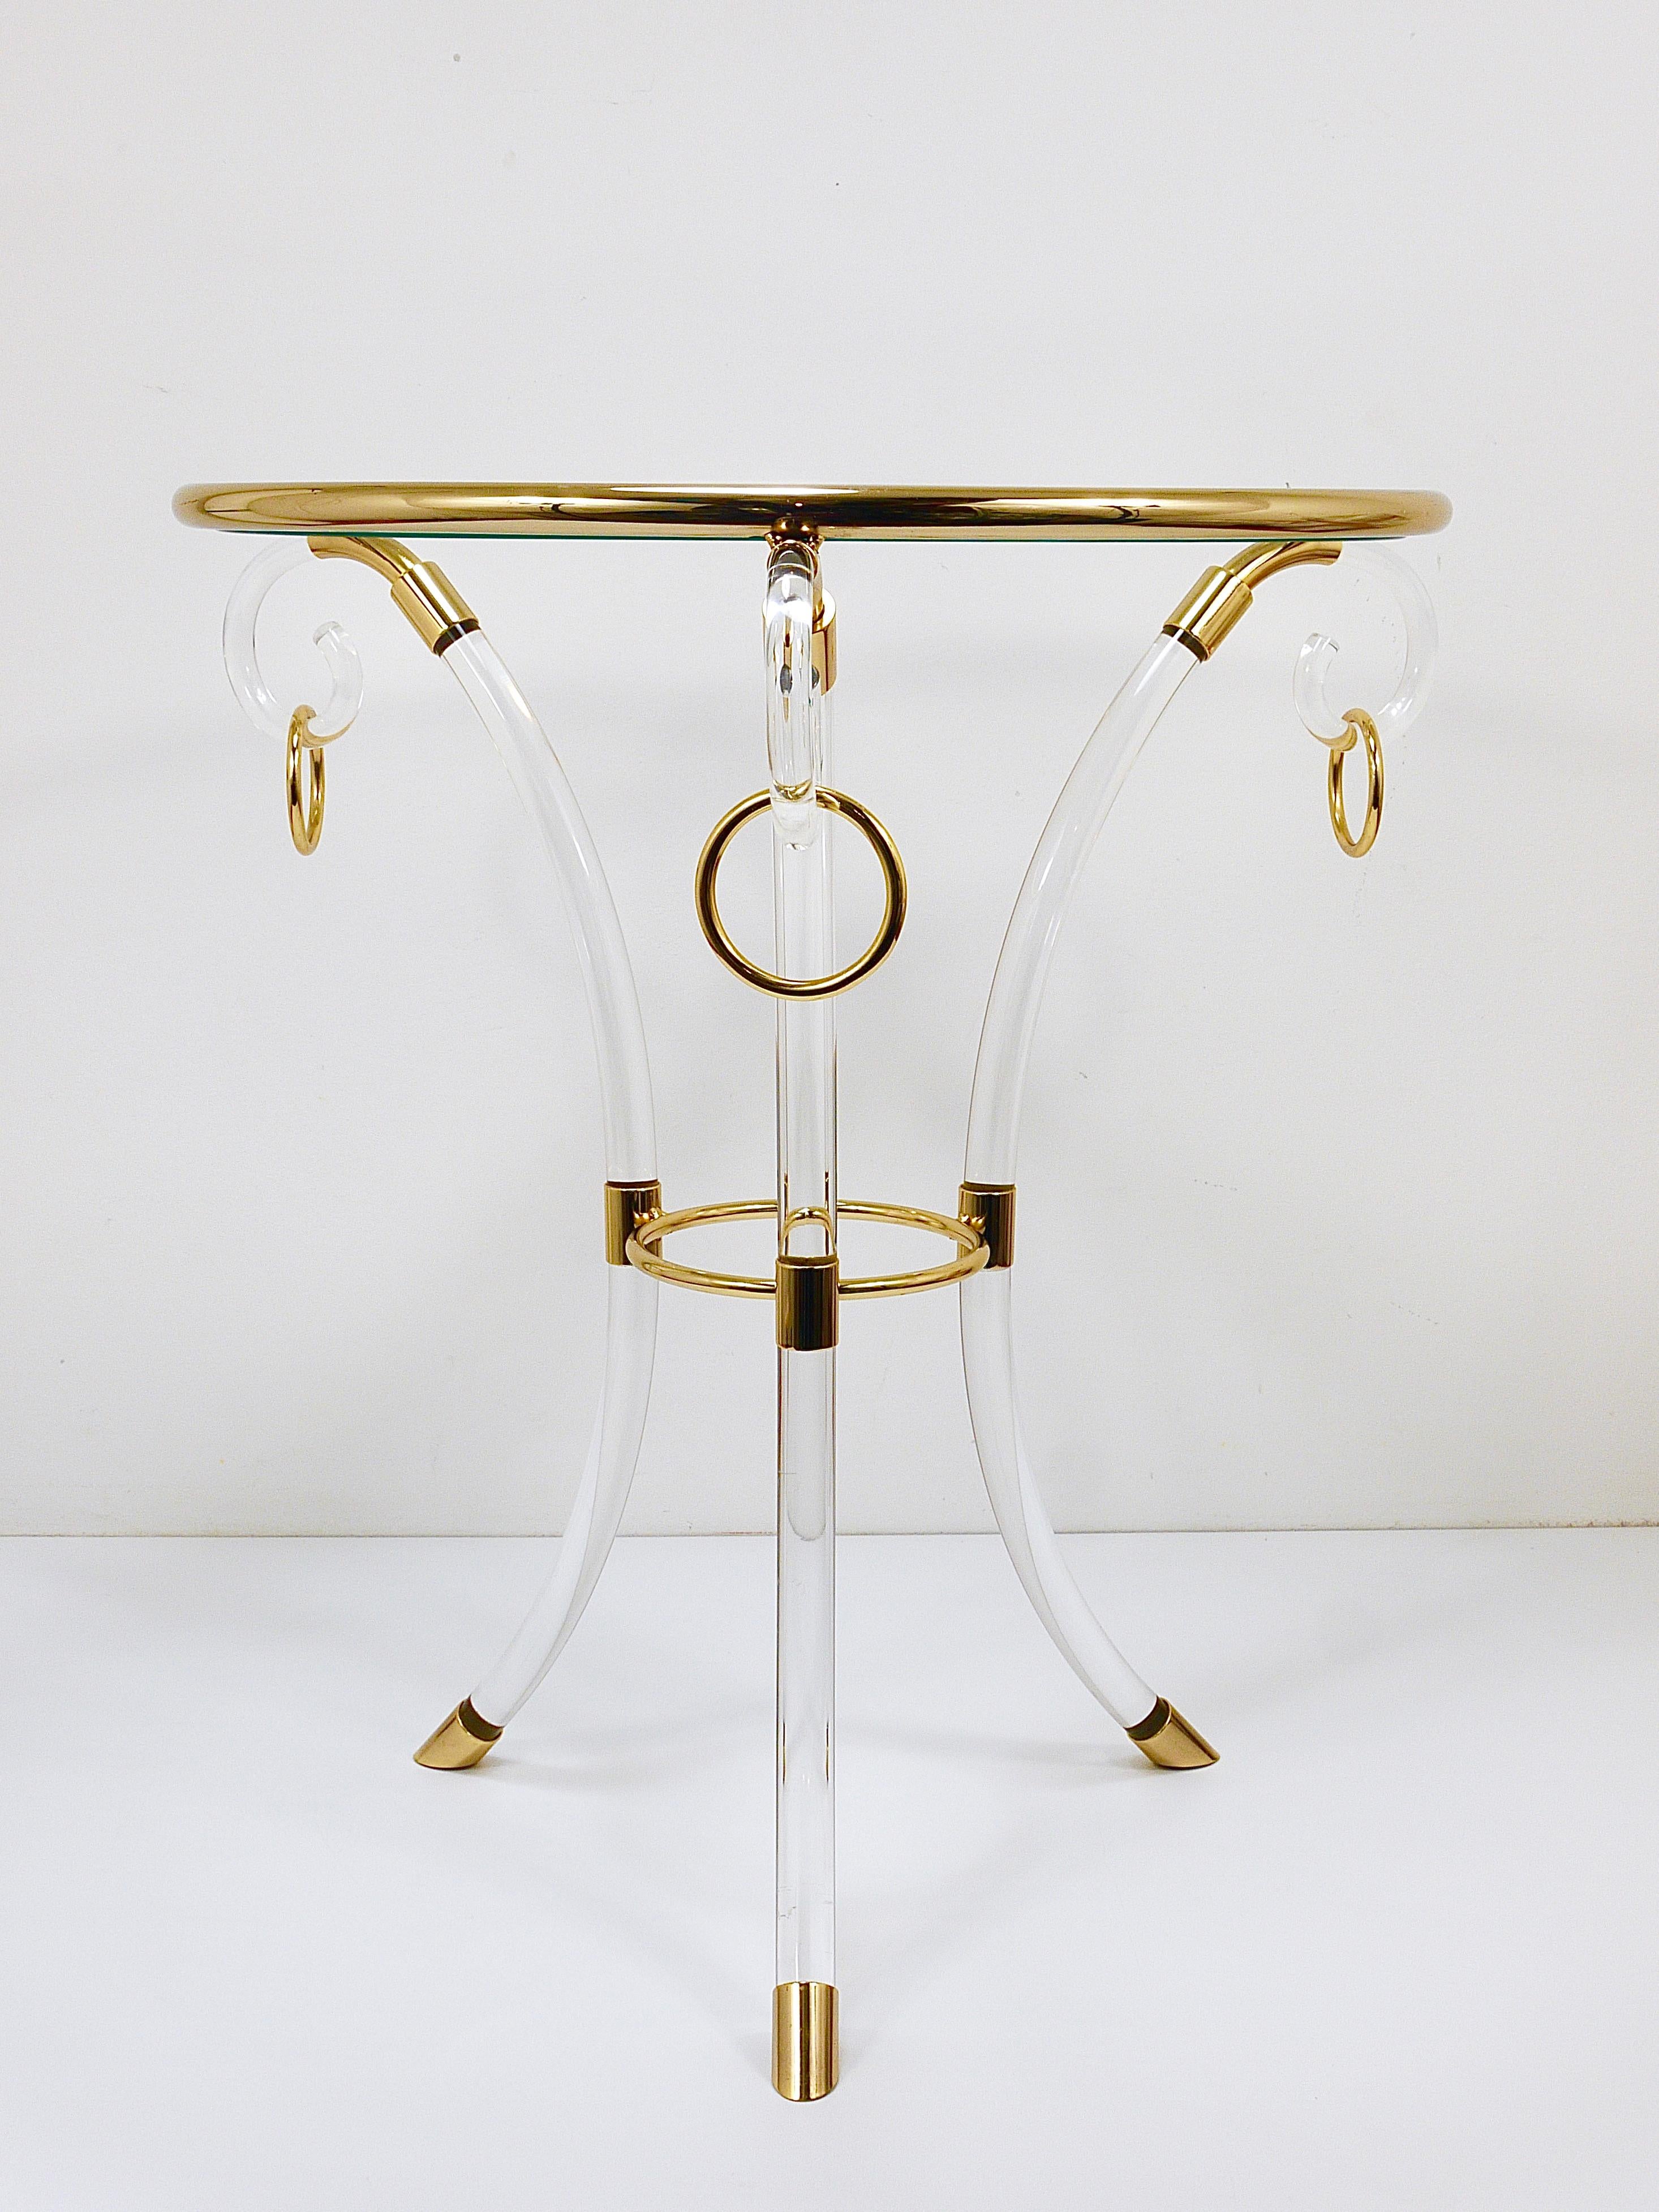 Maison Jansen Style Lucite & Gilt Metal Tripod Coffee Table Pedestal Gueridon For Sale 3